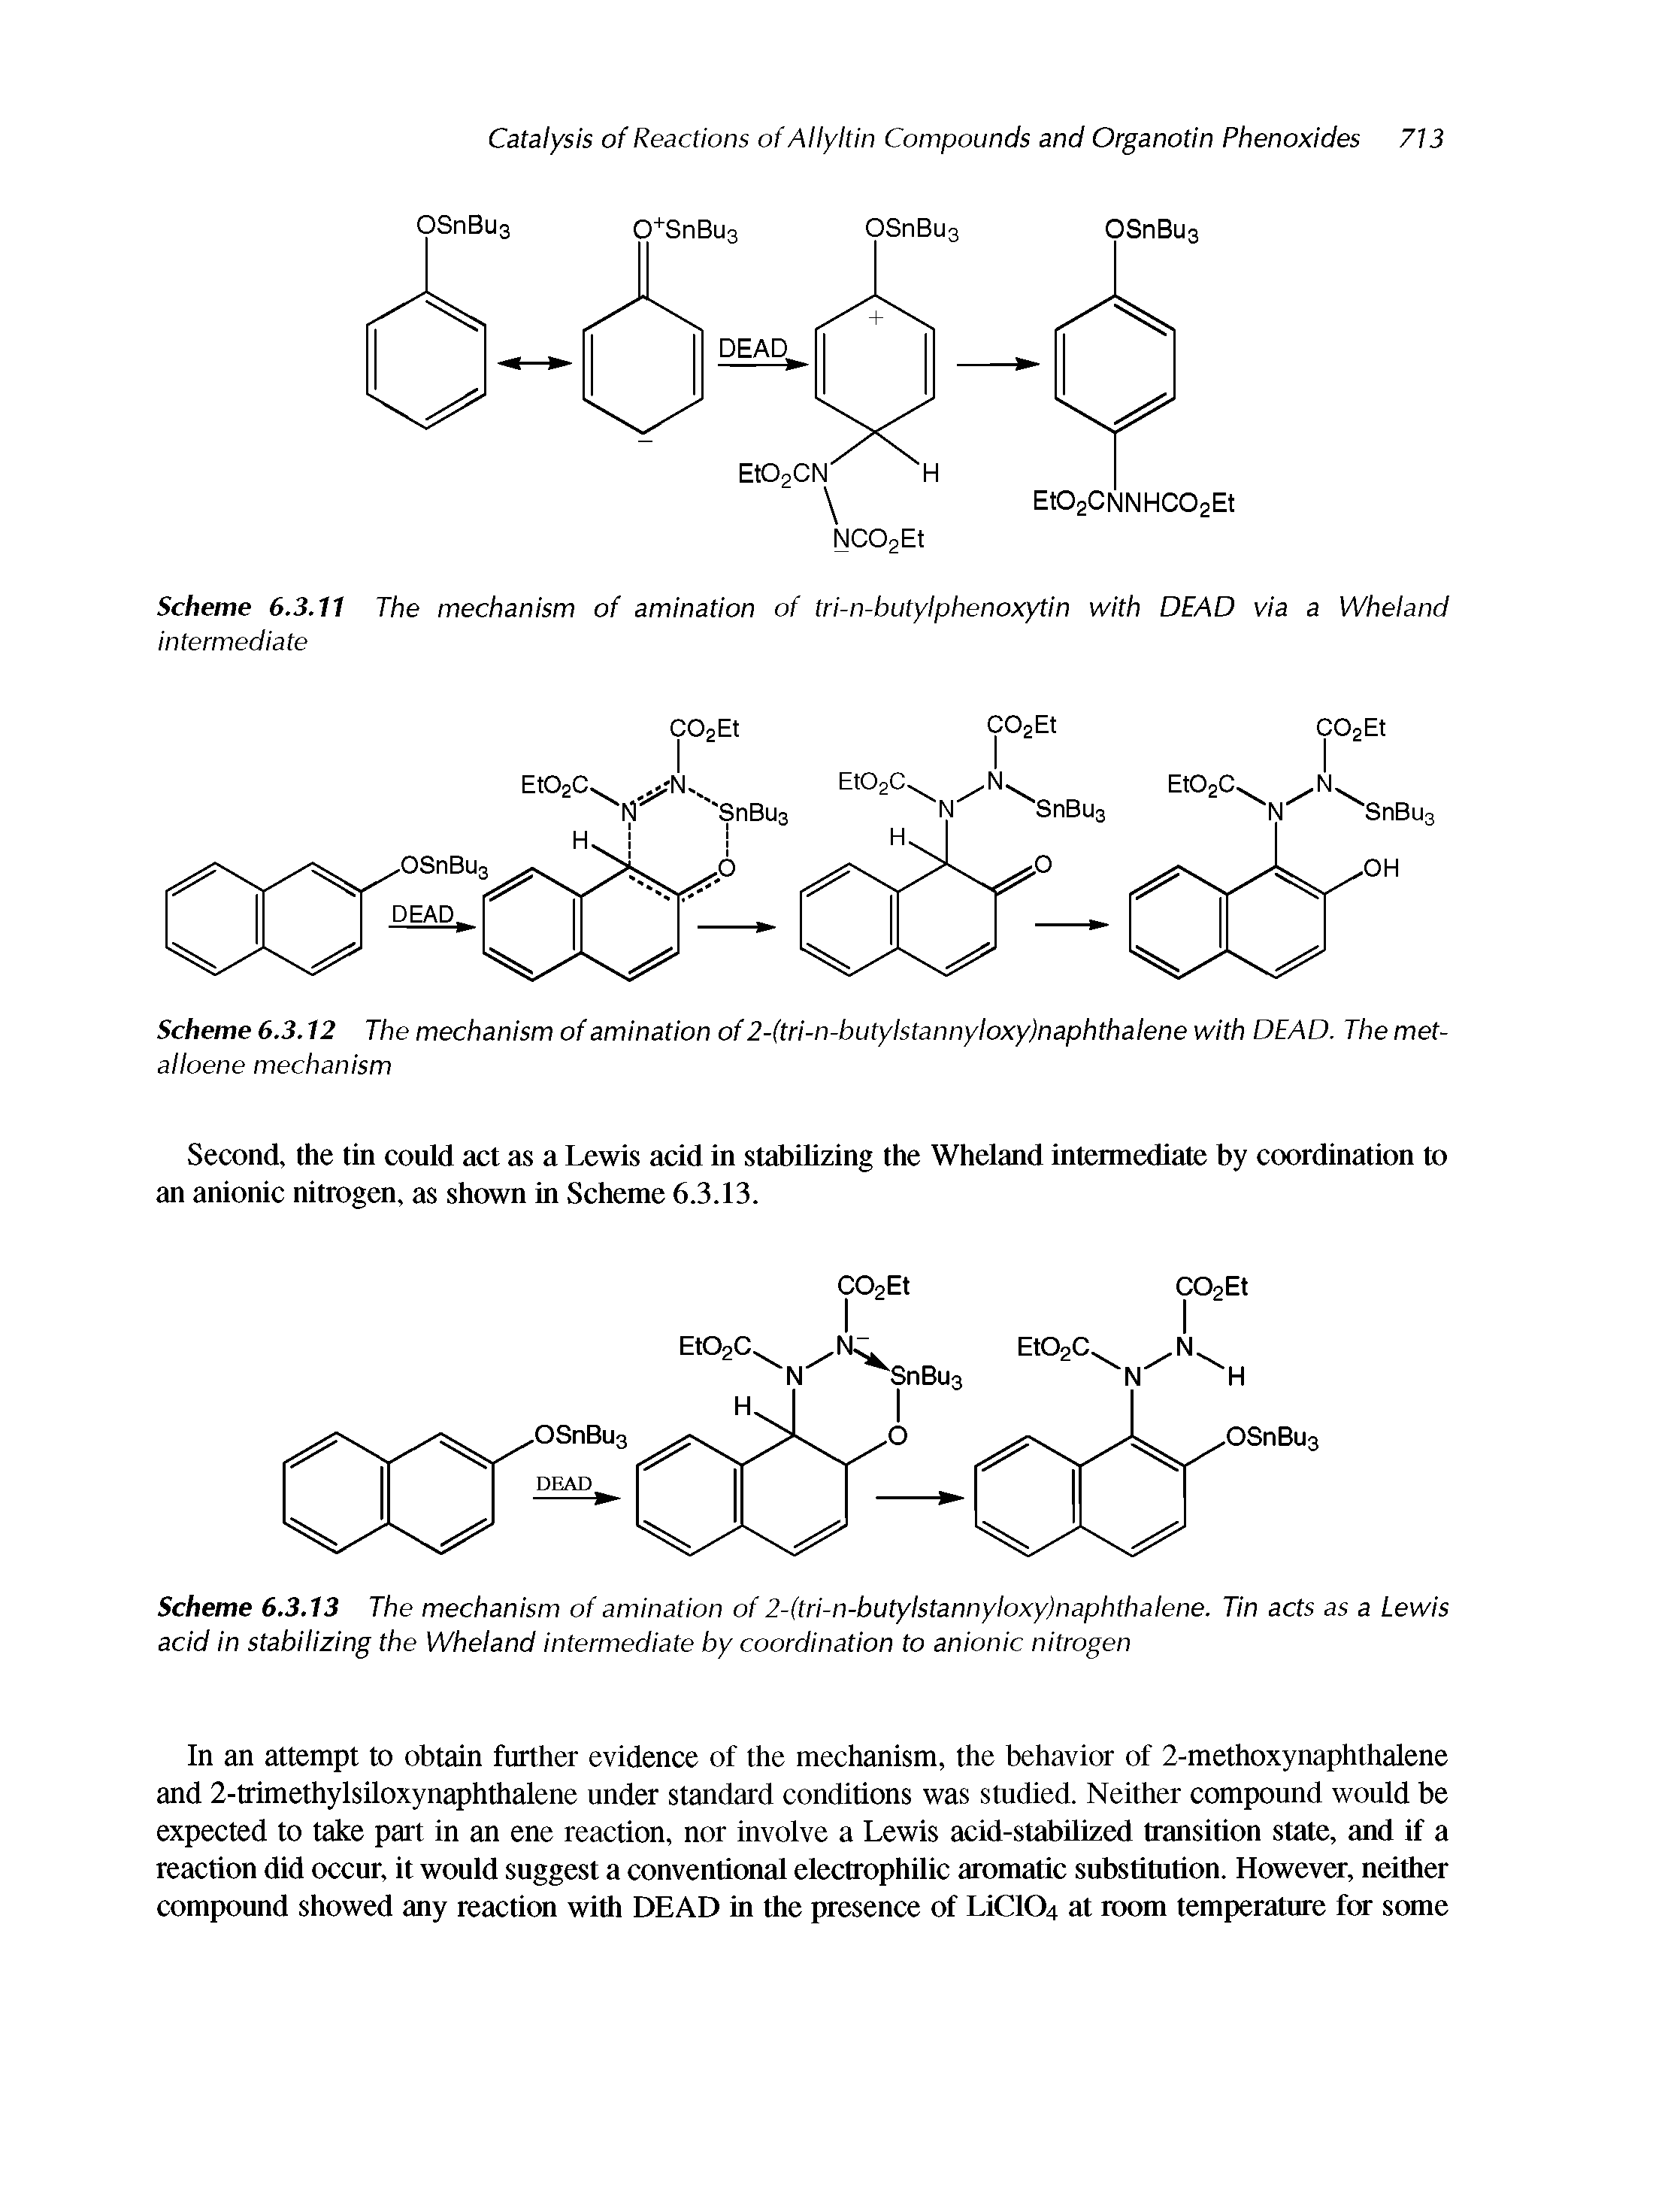 Scheme 6.3.11 The mechanism of amination of tri-n-butylphenoxytin with DEAD via a Wheland intermediate...